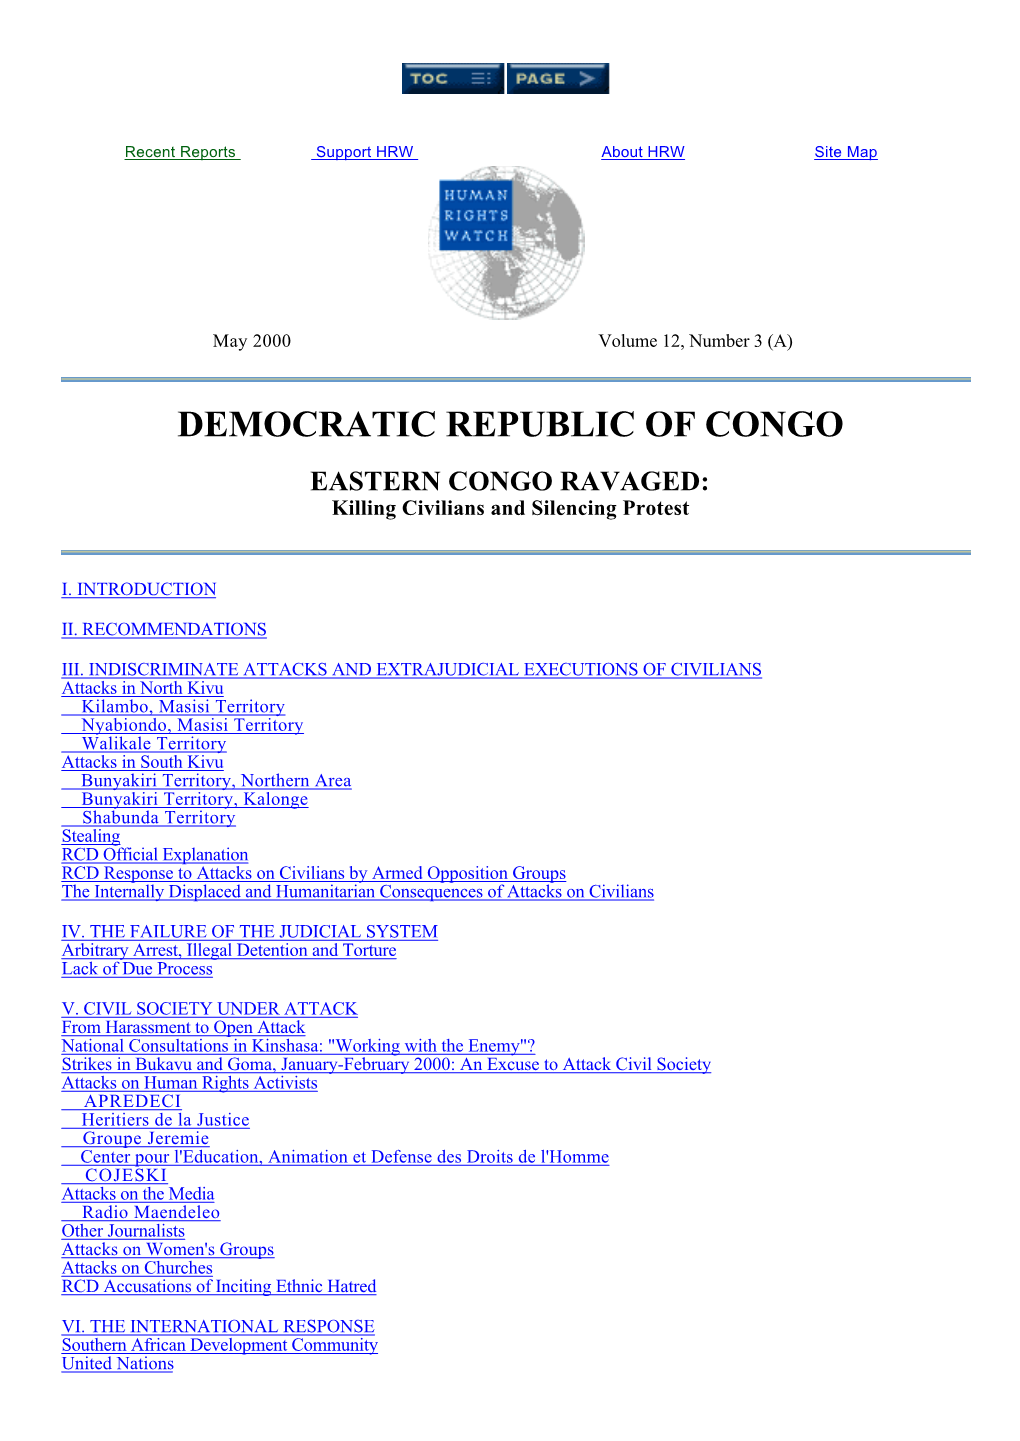 Democratic Republic of Congo:Eastern Congo Ravaged:Killing Civilians and Silencing Protest